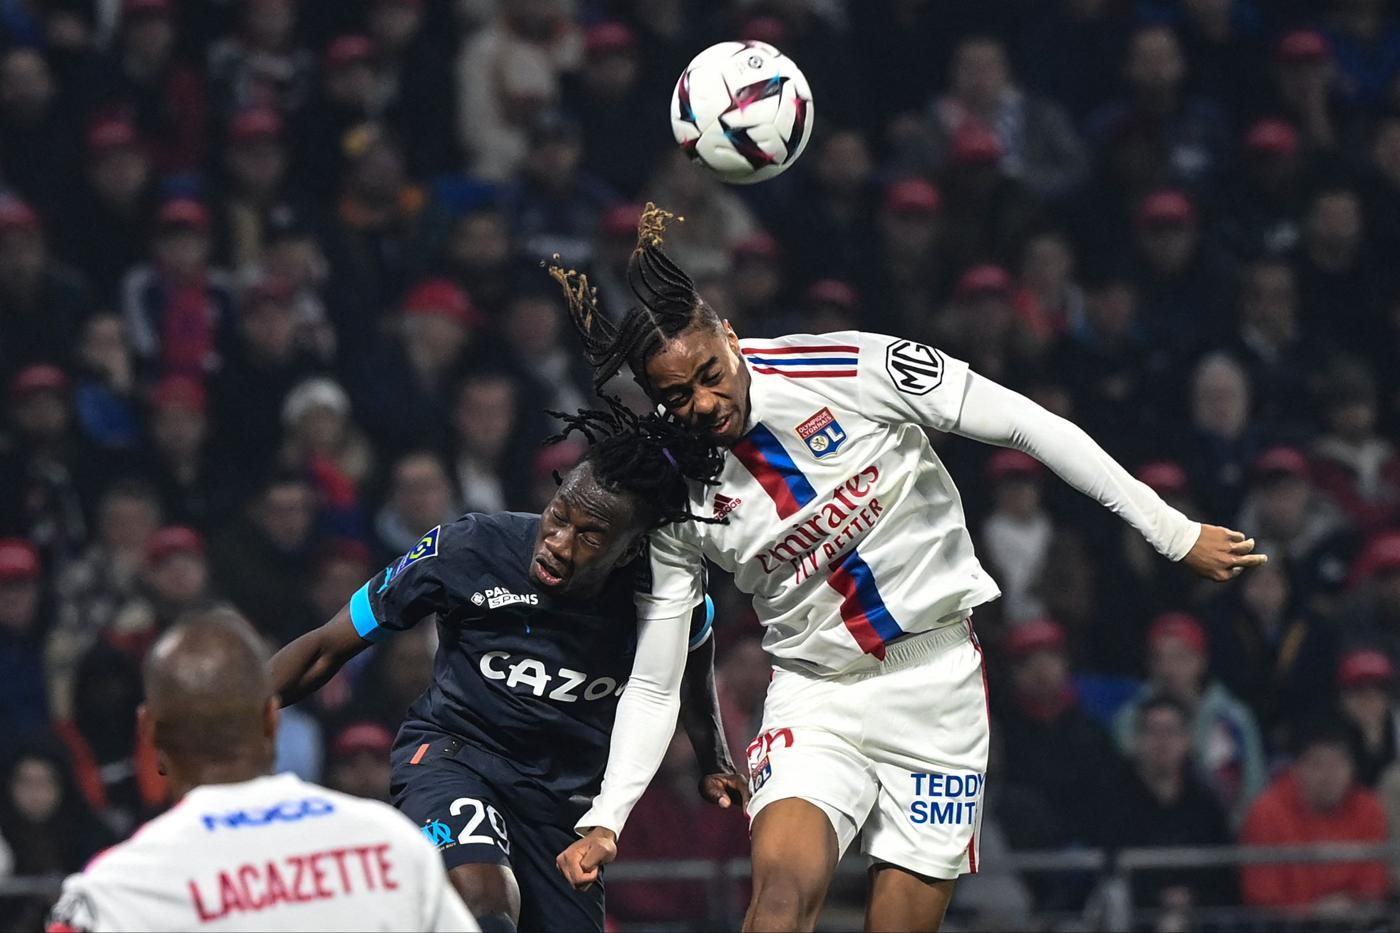 Lyon v Marseille - 1:2. French Championship, round of 32. Match Review, Statistics